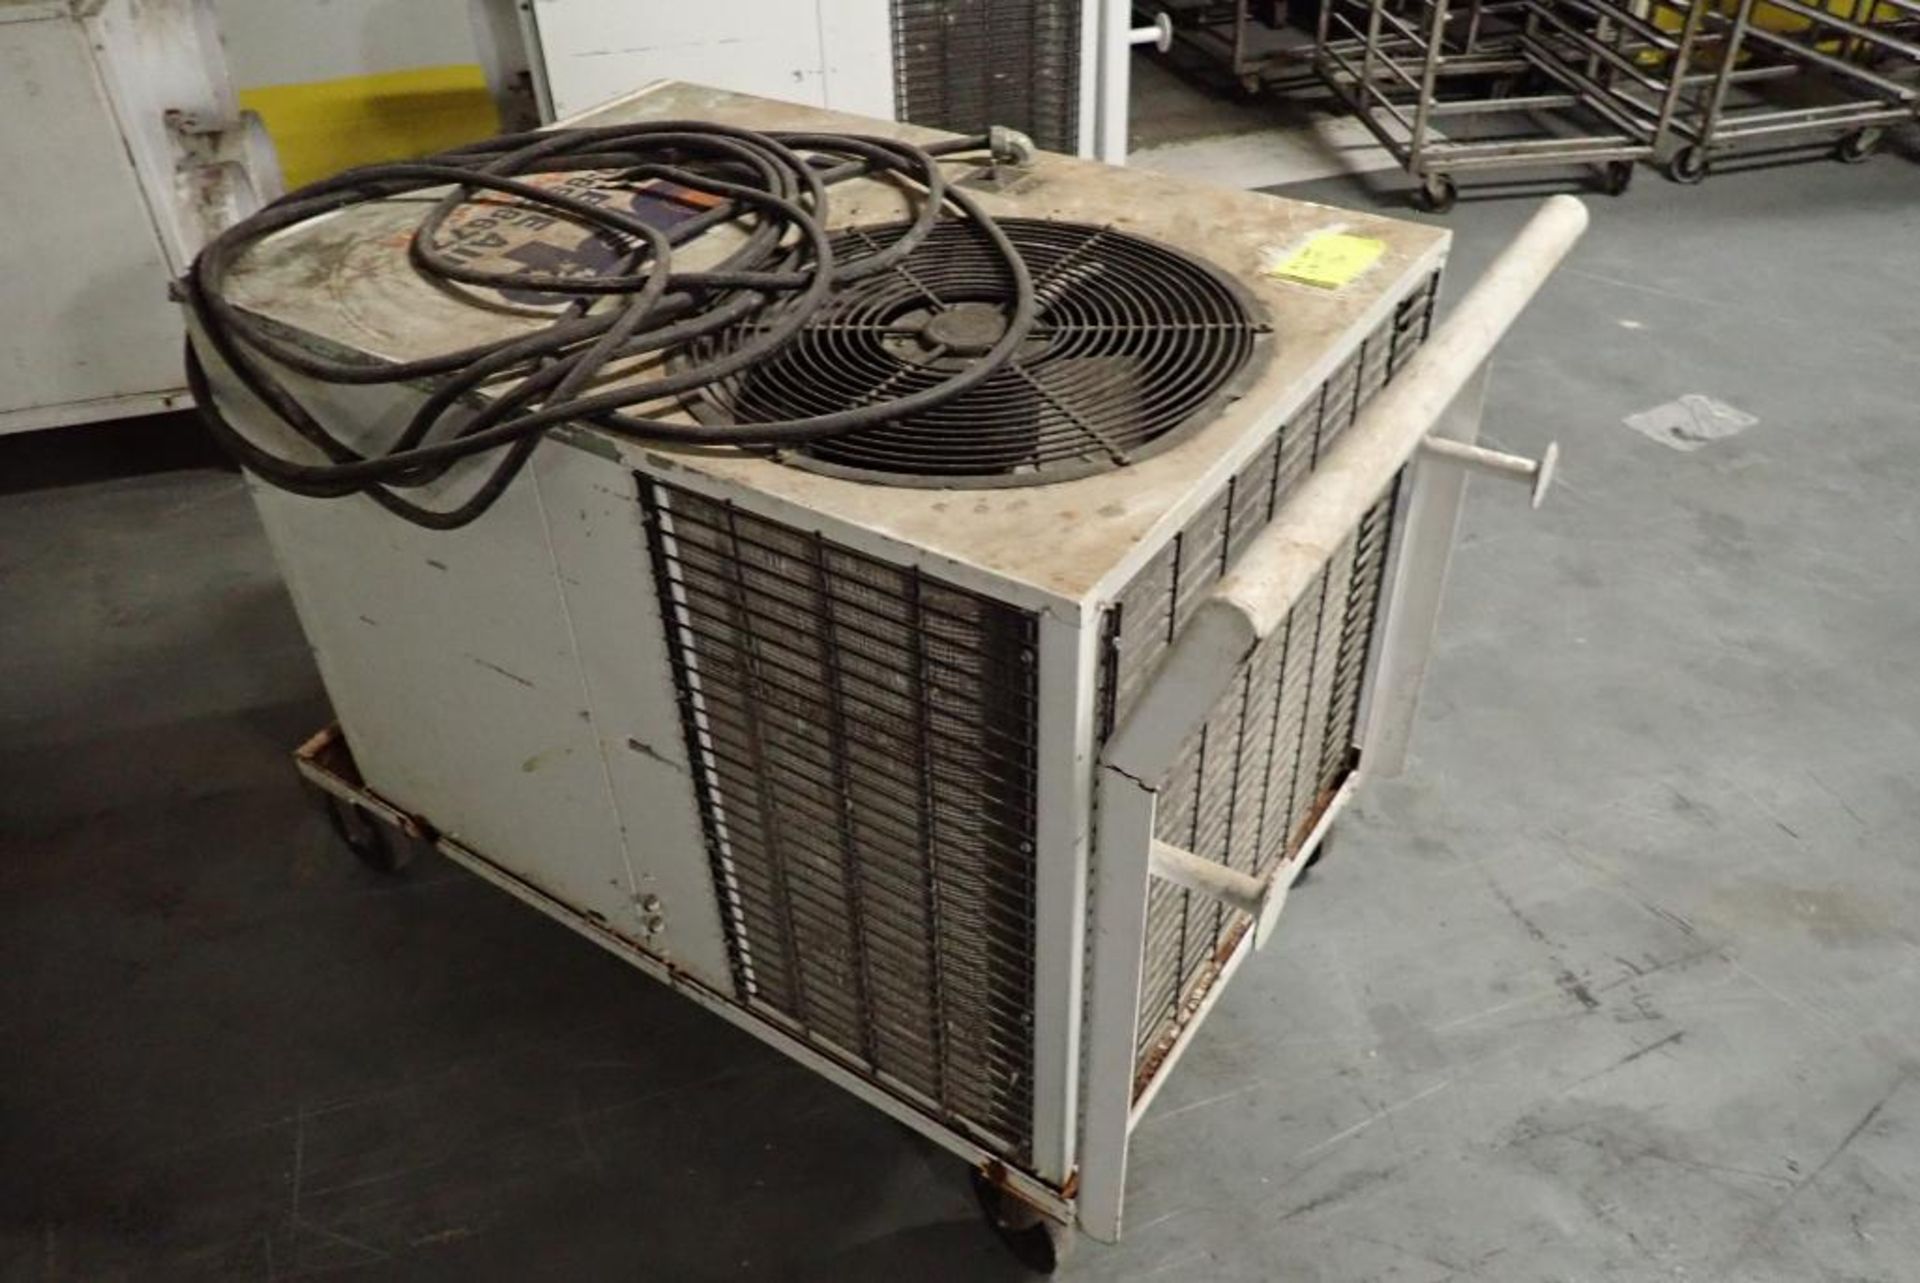 Topp portable air conditioner/dehumidifier/heat pump - Image 6 of 8